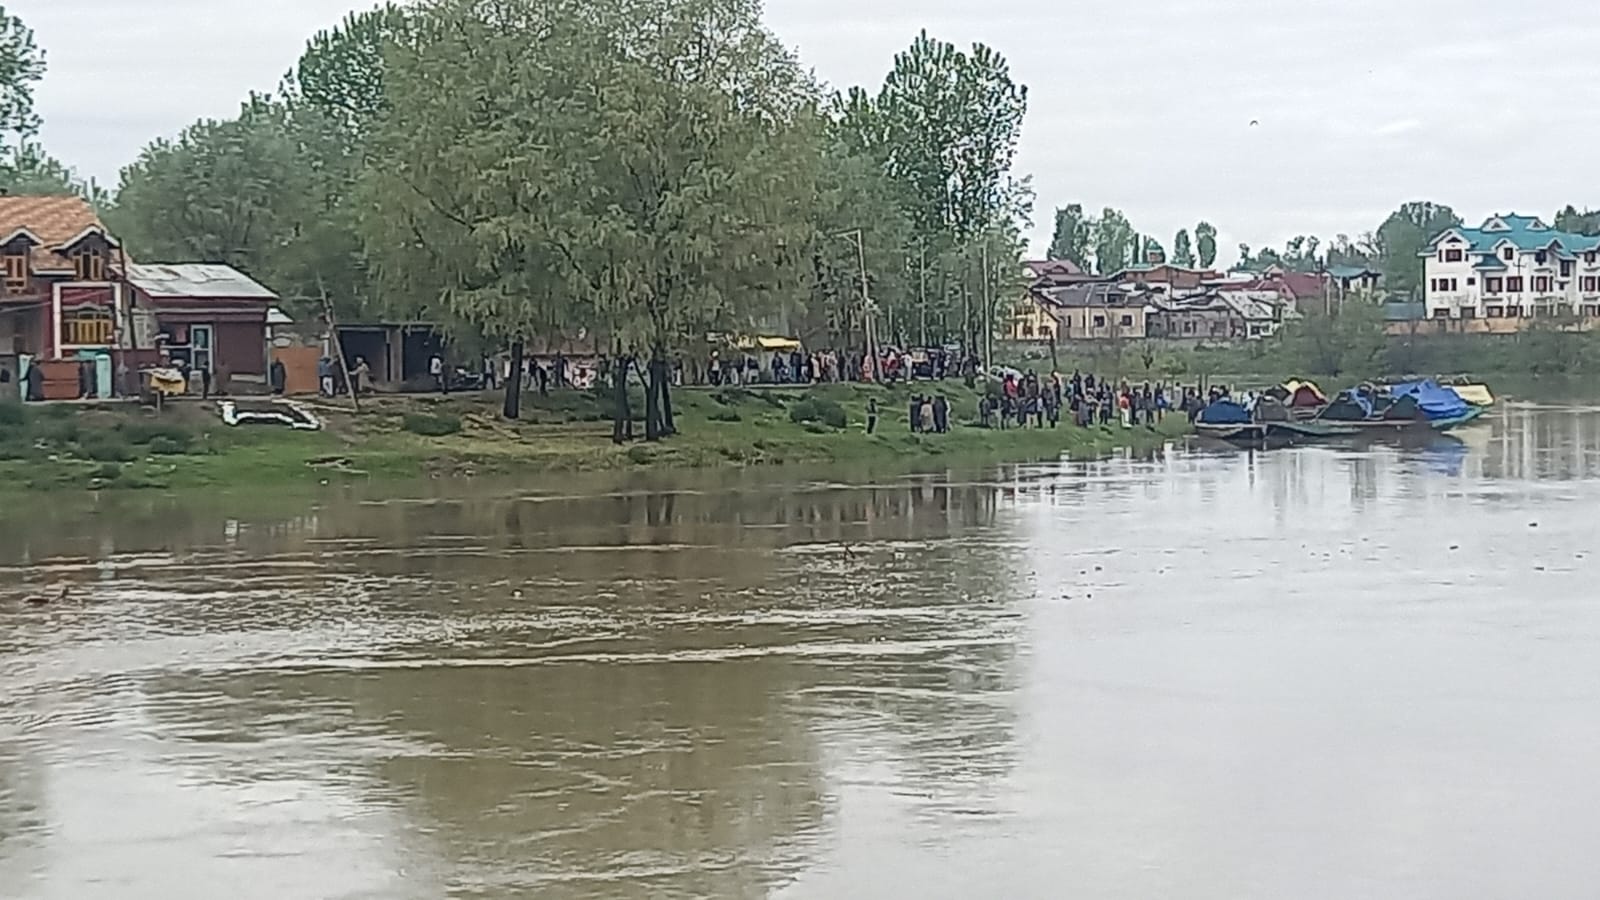 Boat ferrying children capsizes in Jhelum in Srinagar, casualties reported